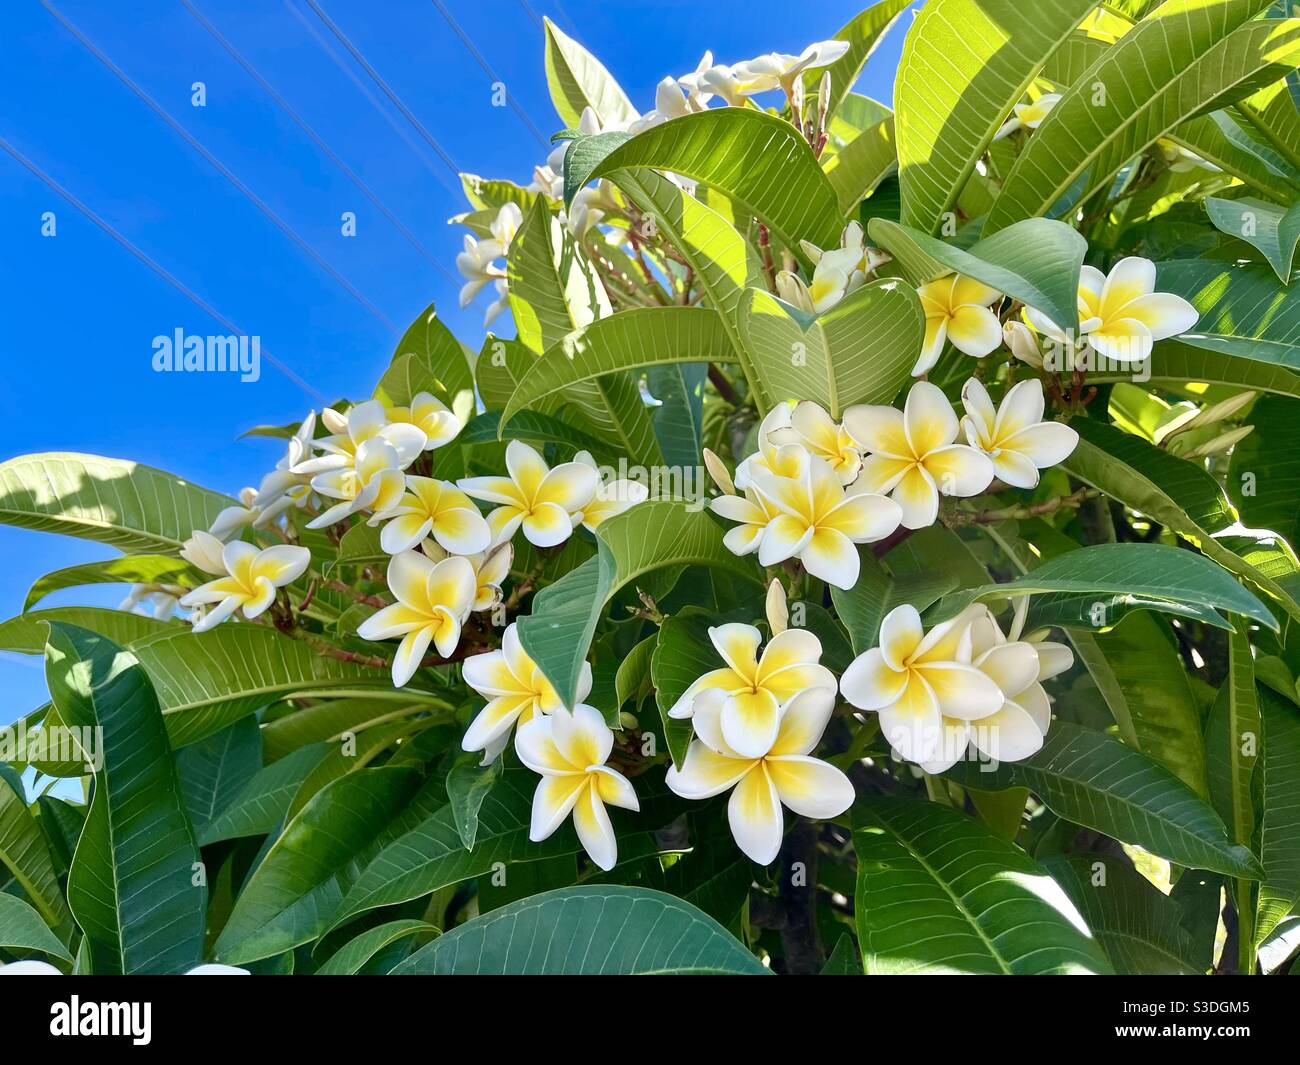 Flowering frangipani or plumeria tree Stock Photo